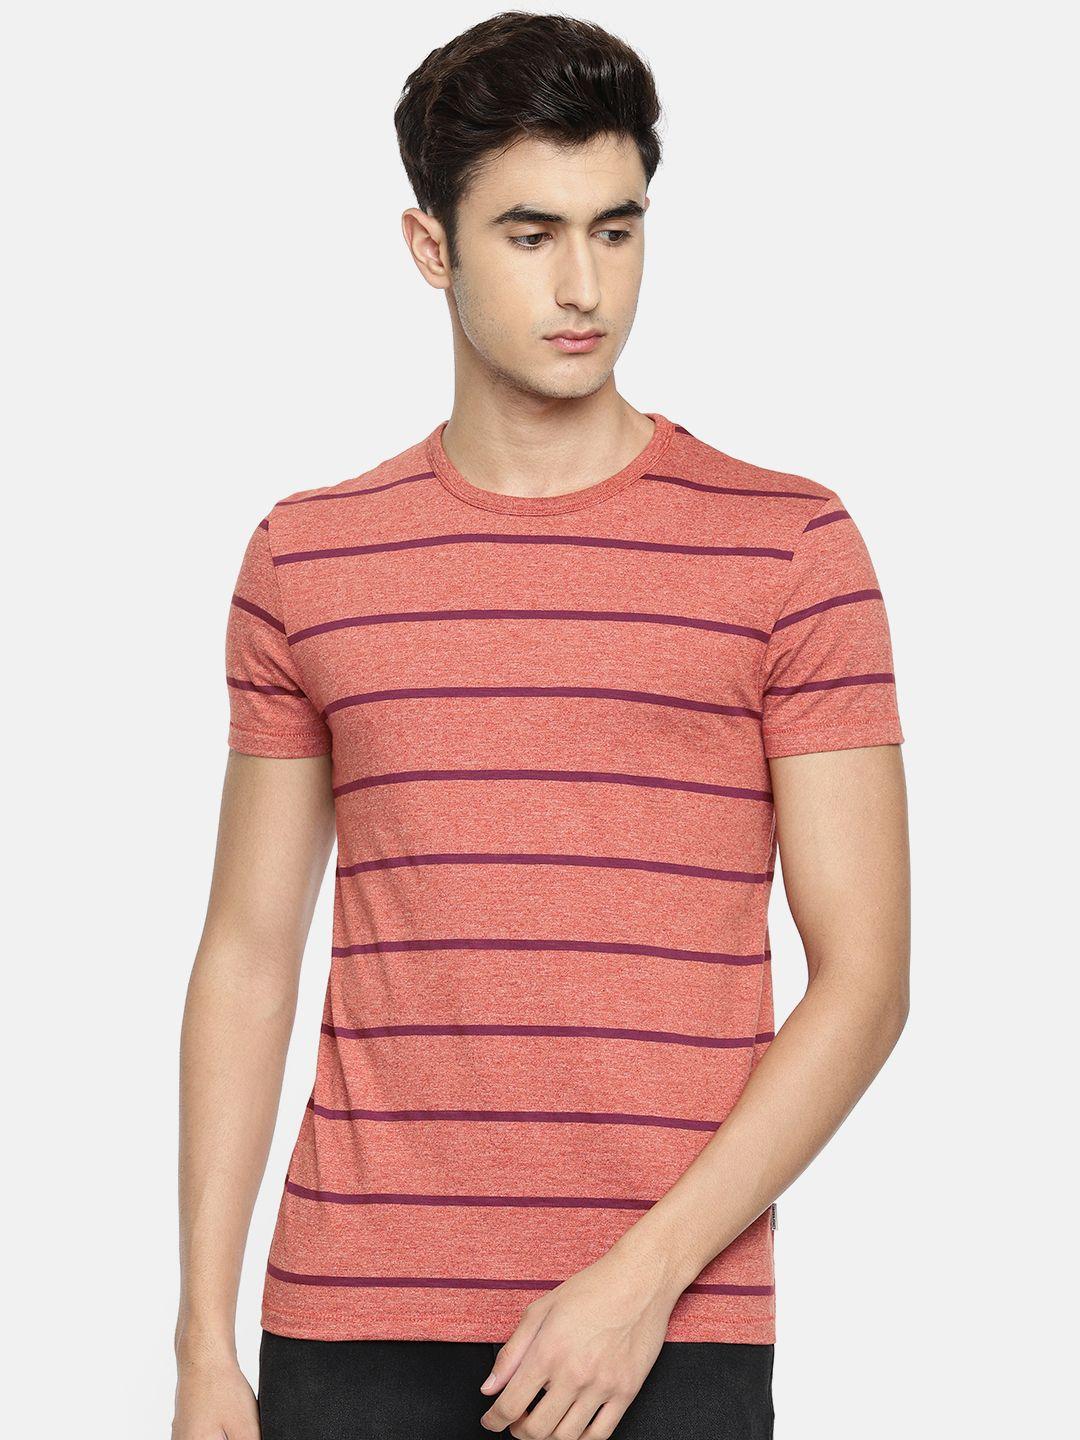 jack  jones men rust red  burgundy striped round neck pure cotton t-shirt